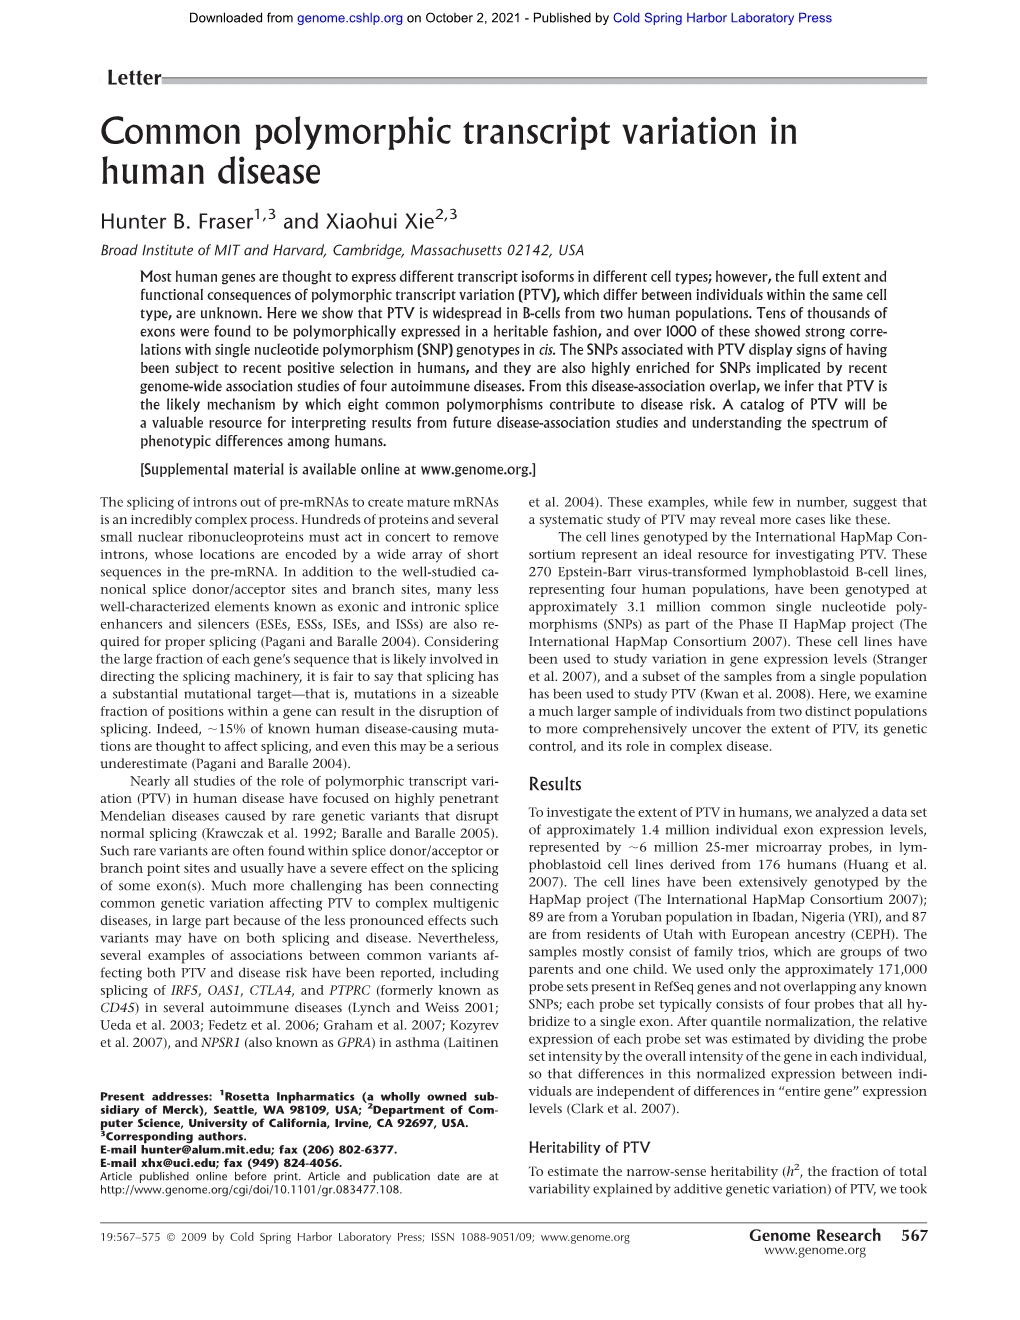 Common Polymorphic Transcript Variation in Human Disease